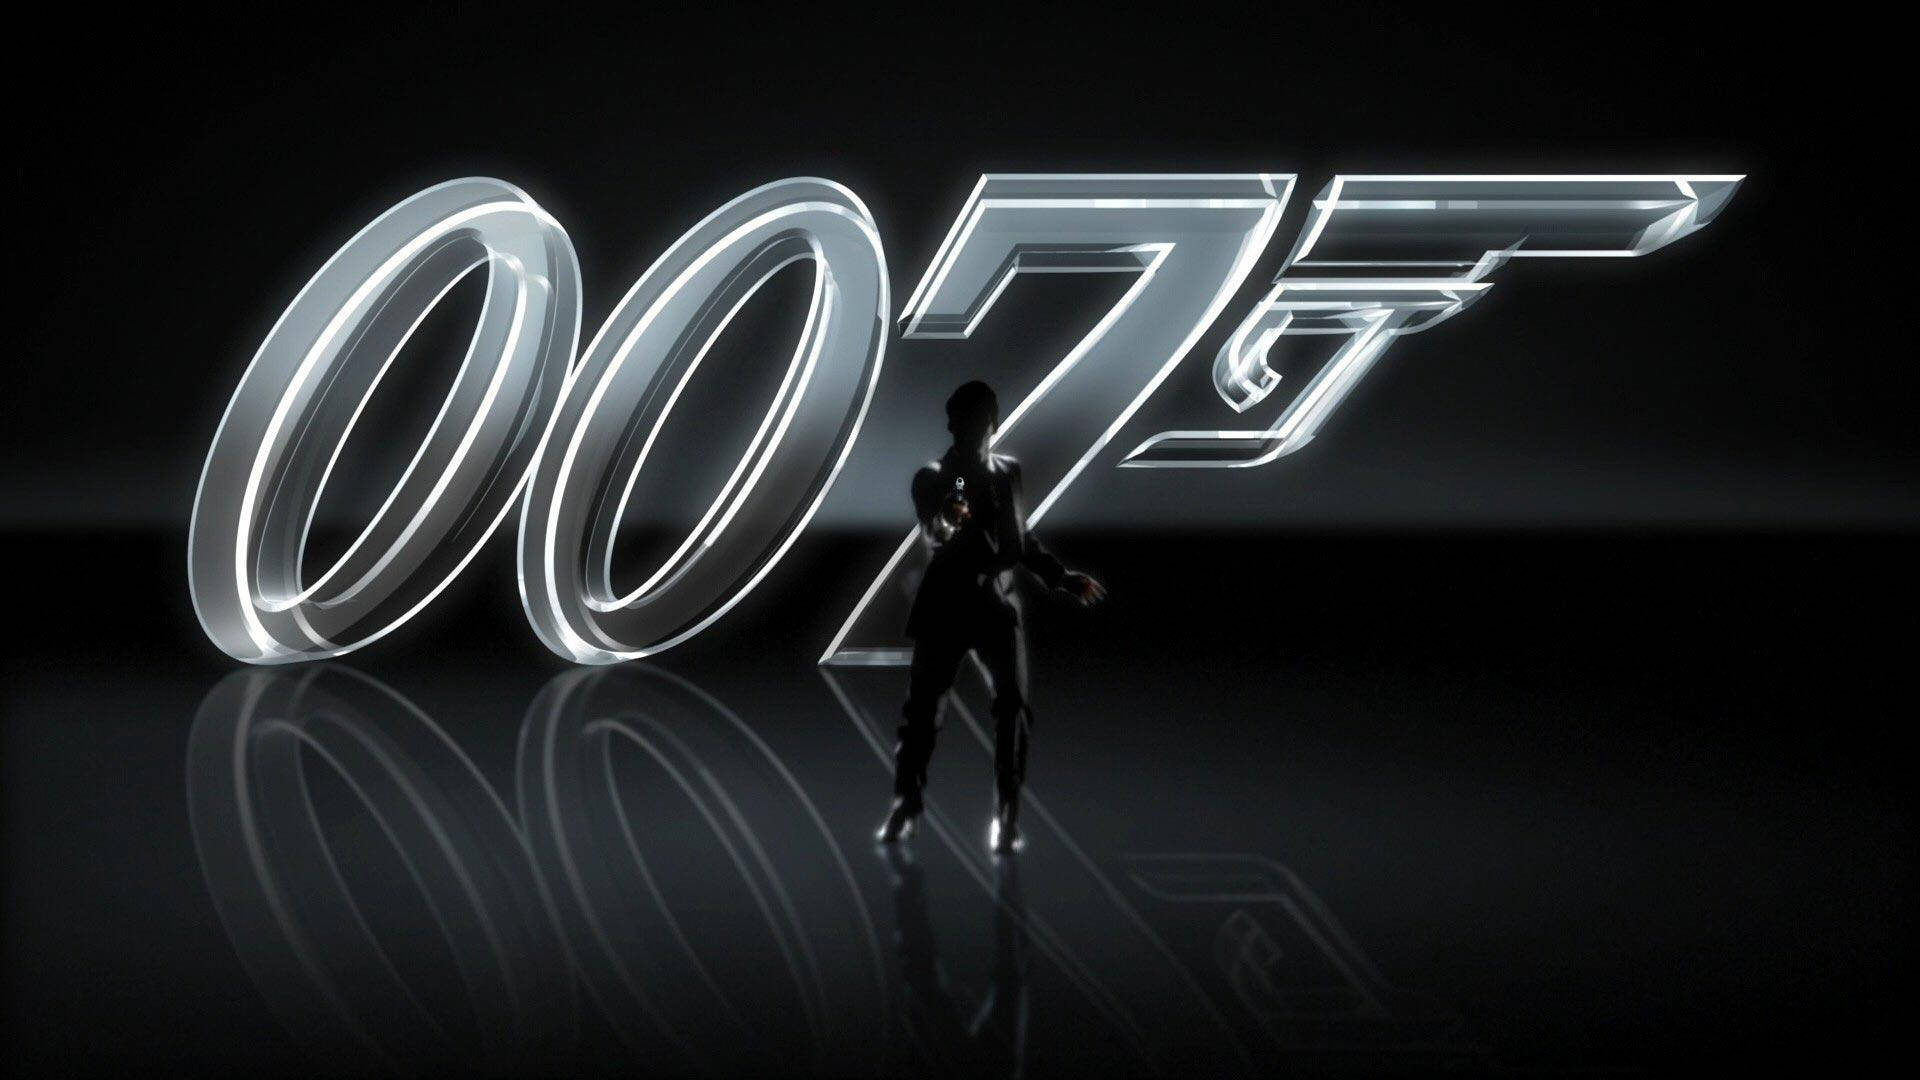 James Bond 007 Film Wallpaper